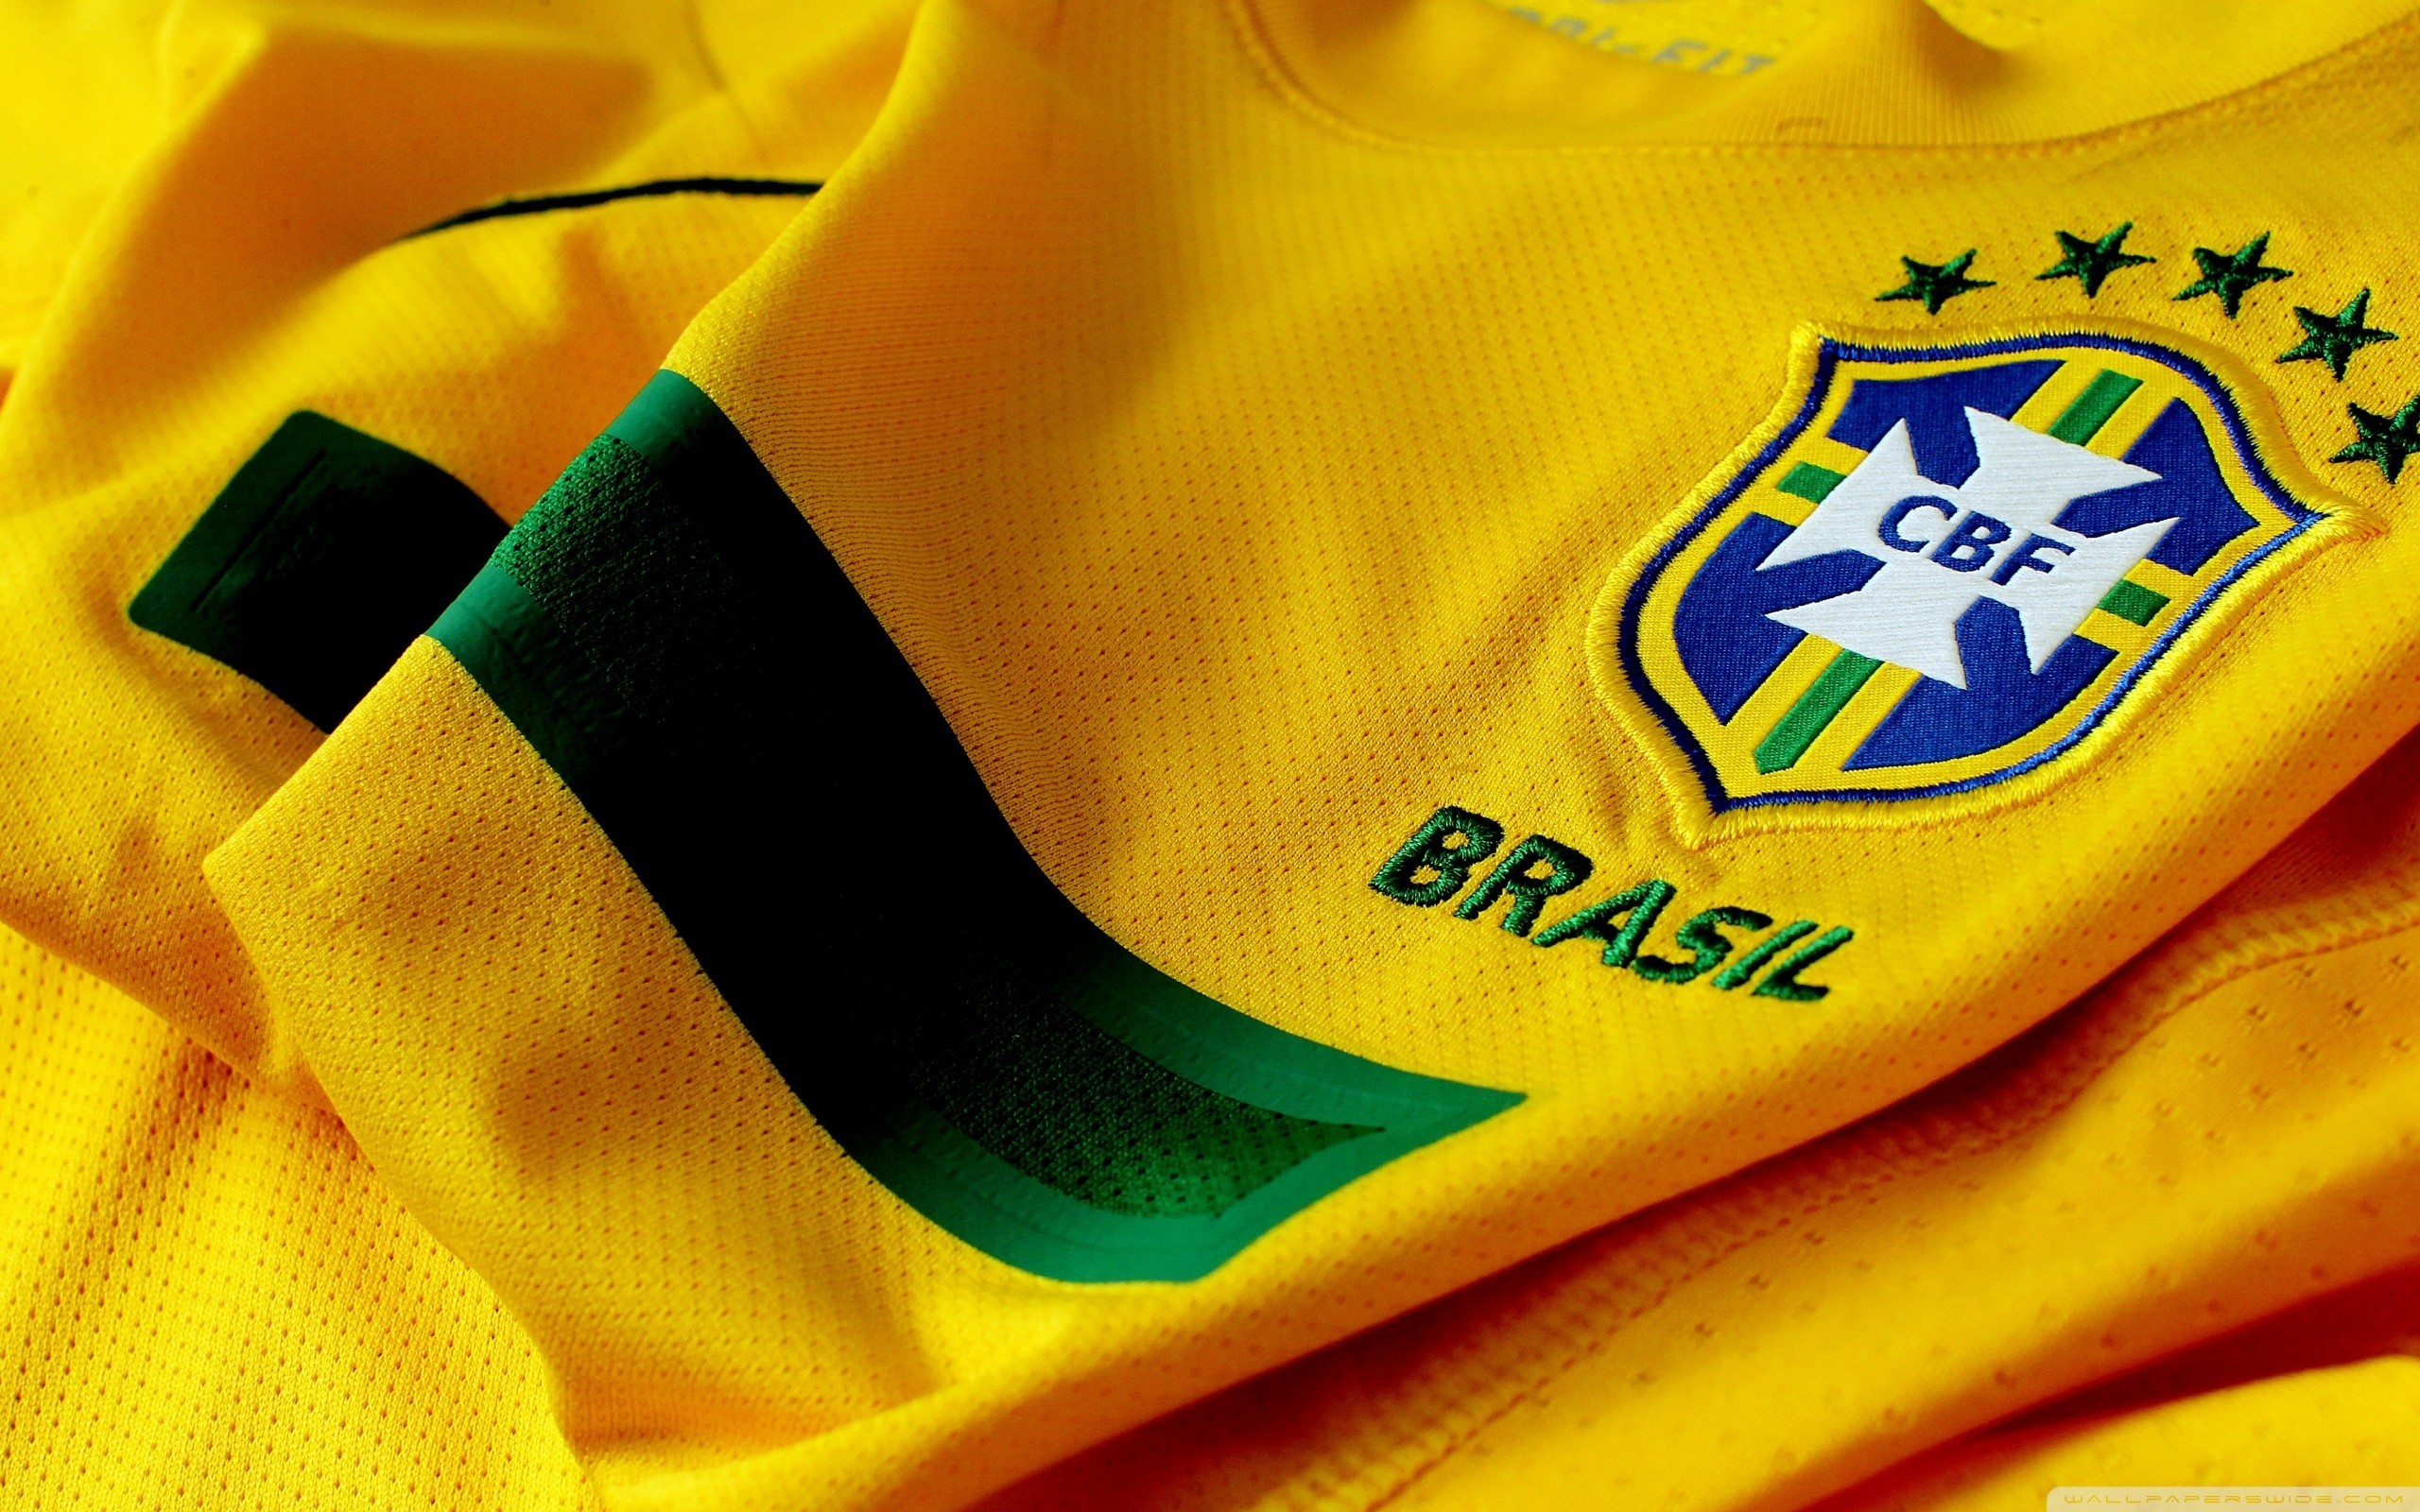 General 2560x1600 Brazil soccer sports jerseys logo